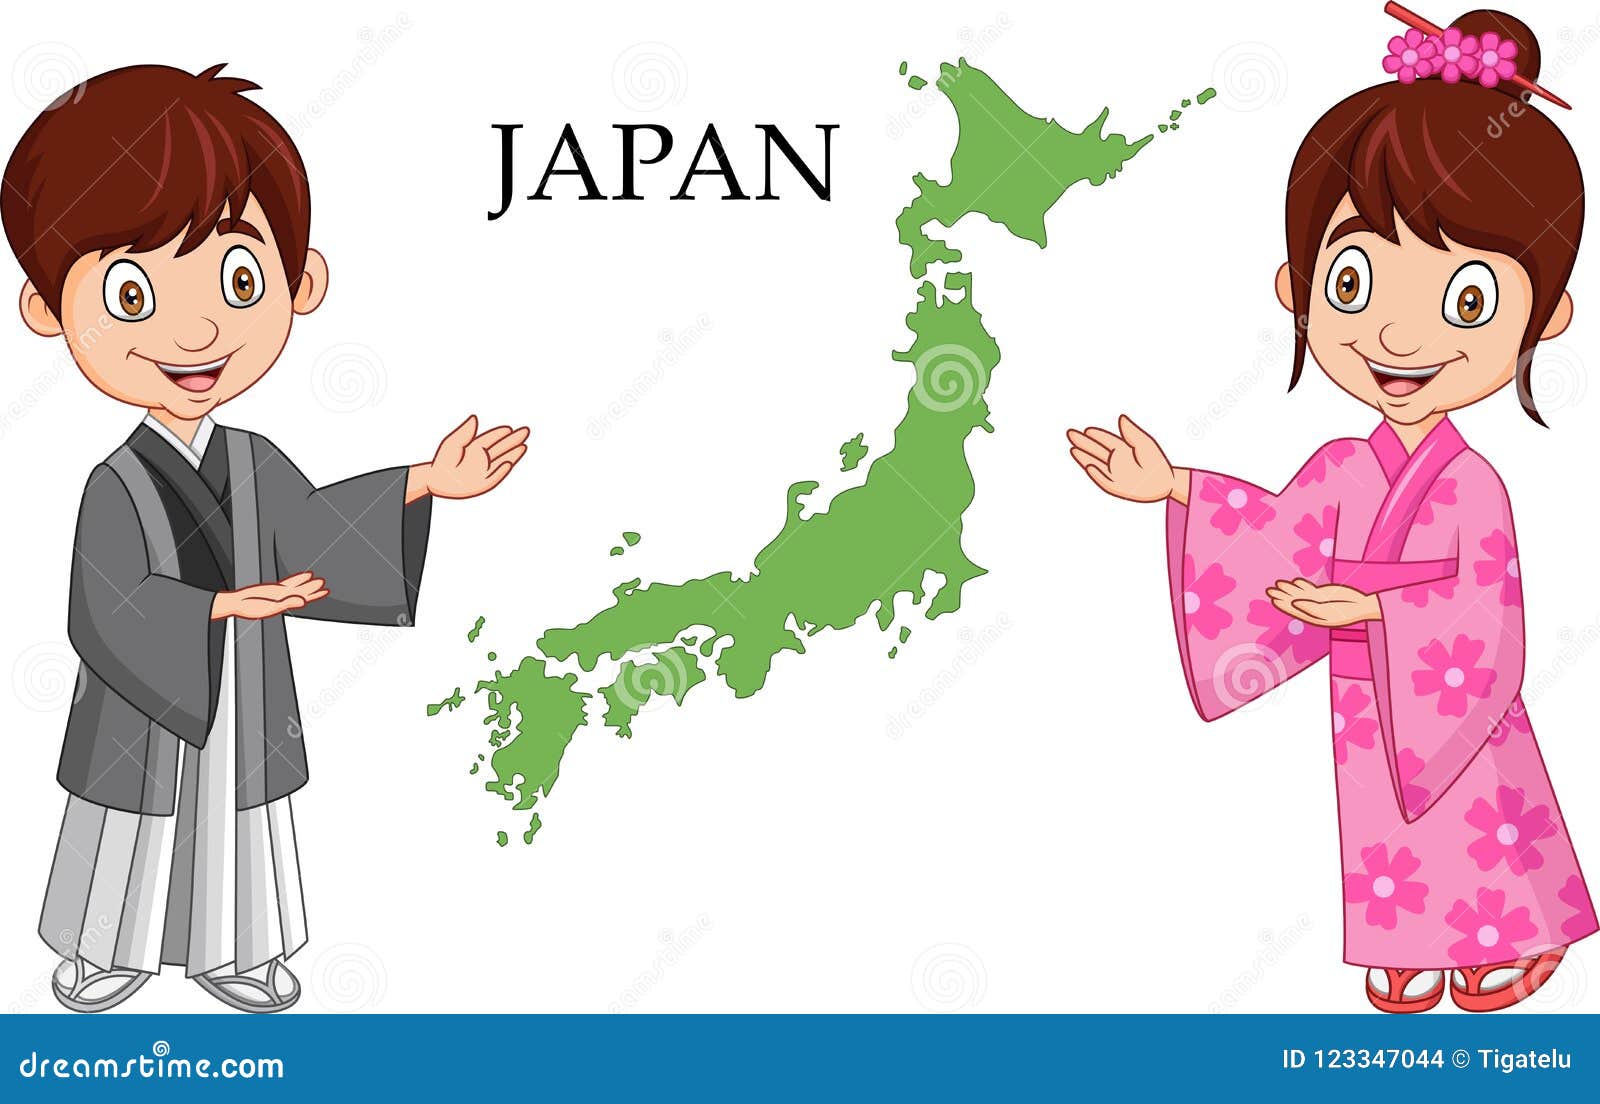 Cartoon Japanese Couple Wearing Traditional Costume Stock